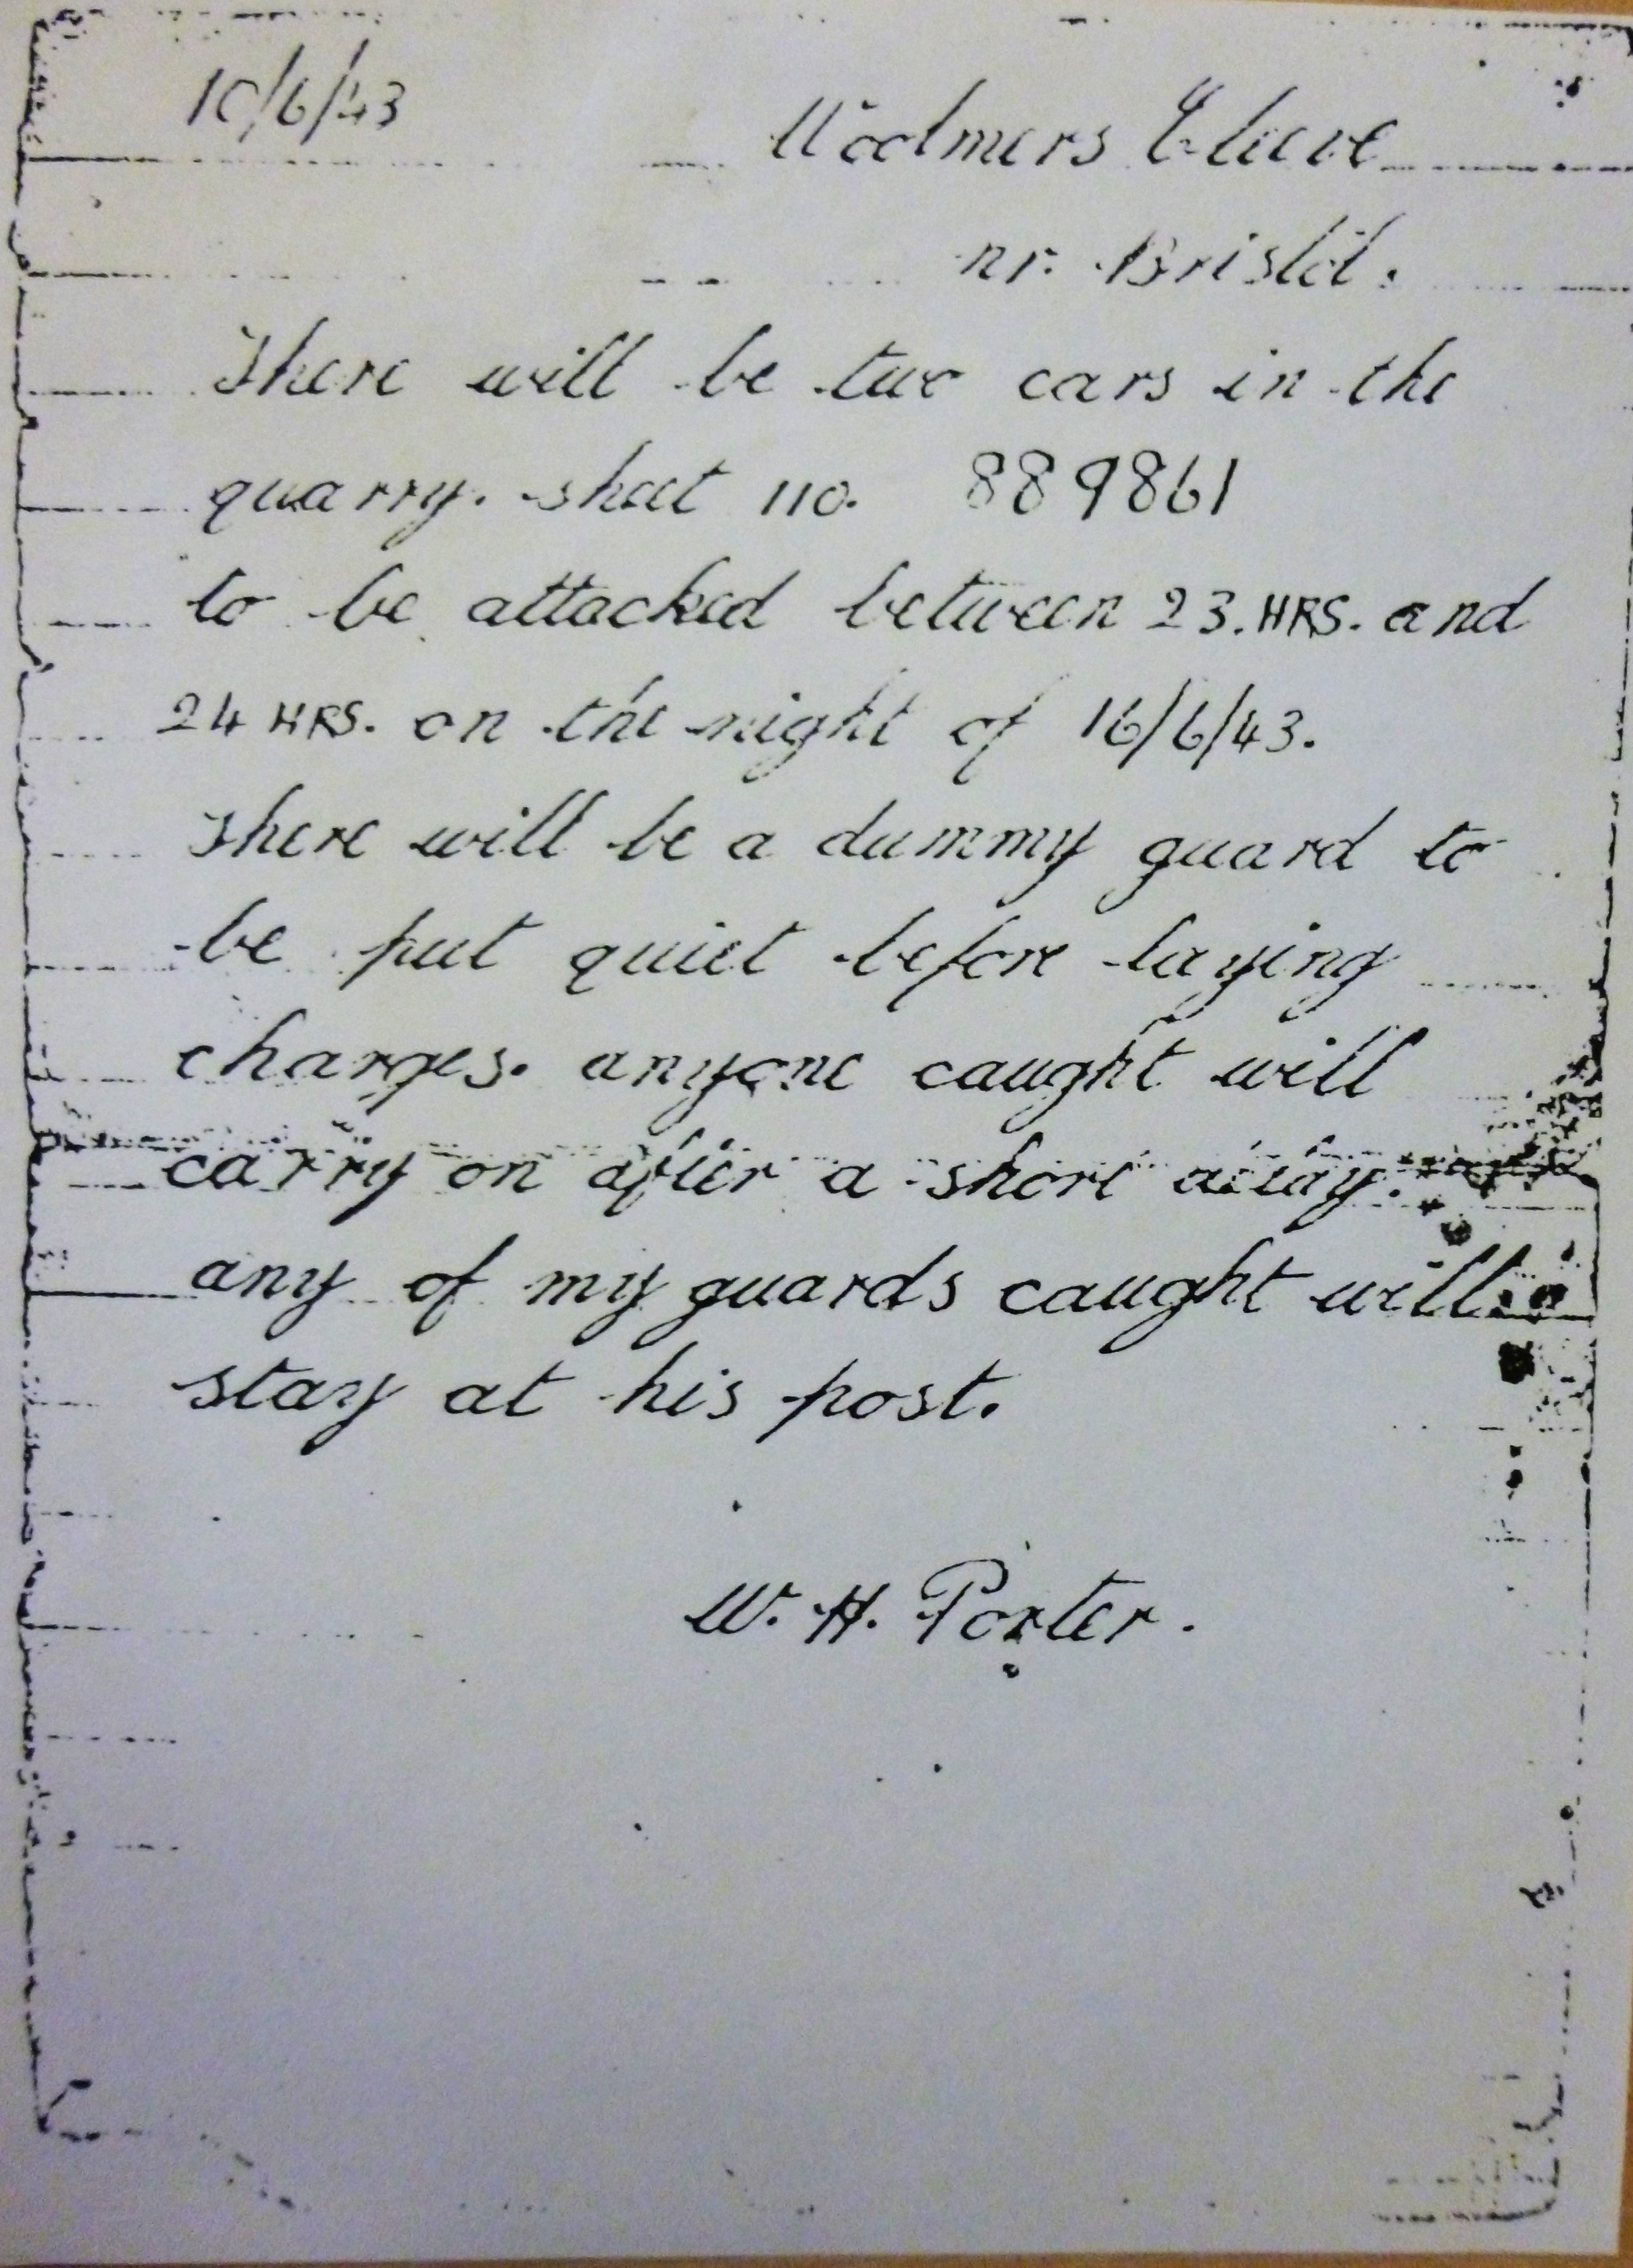 Sgt William Porter training letter